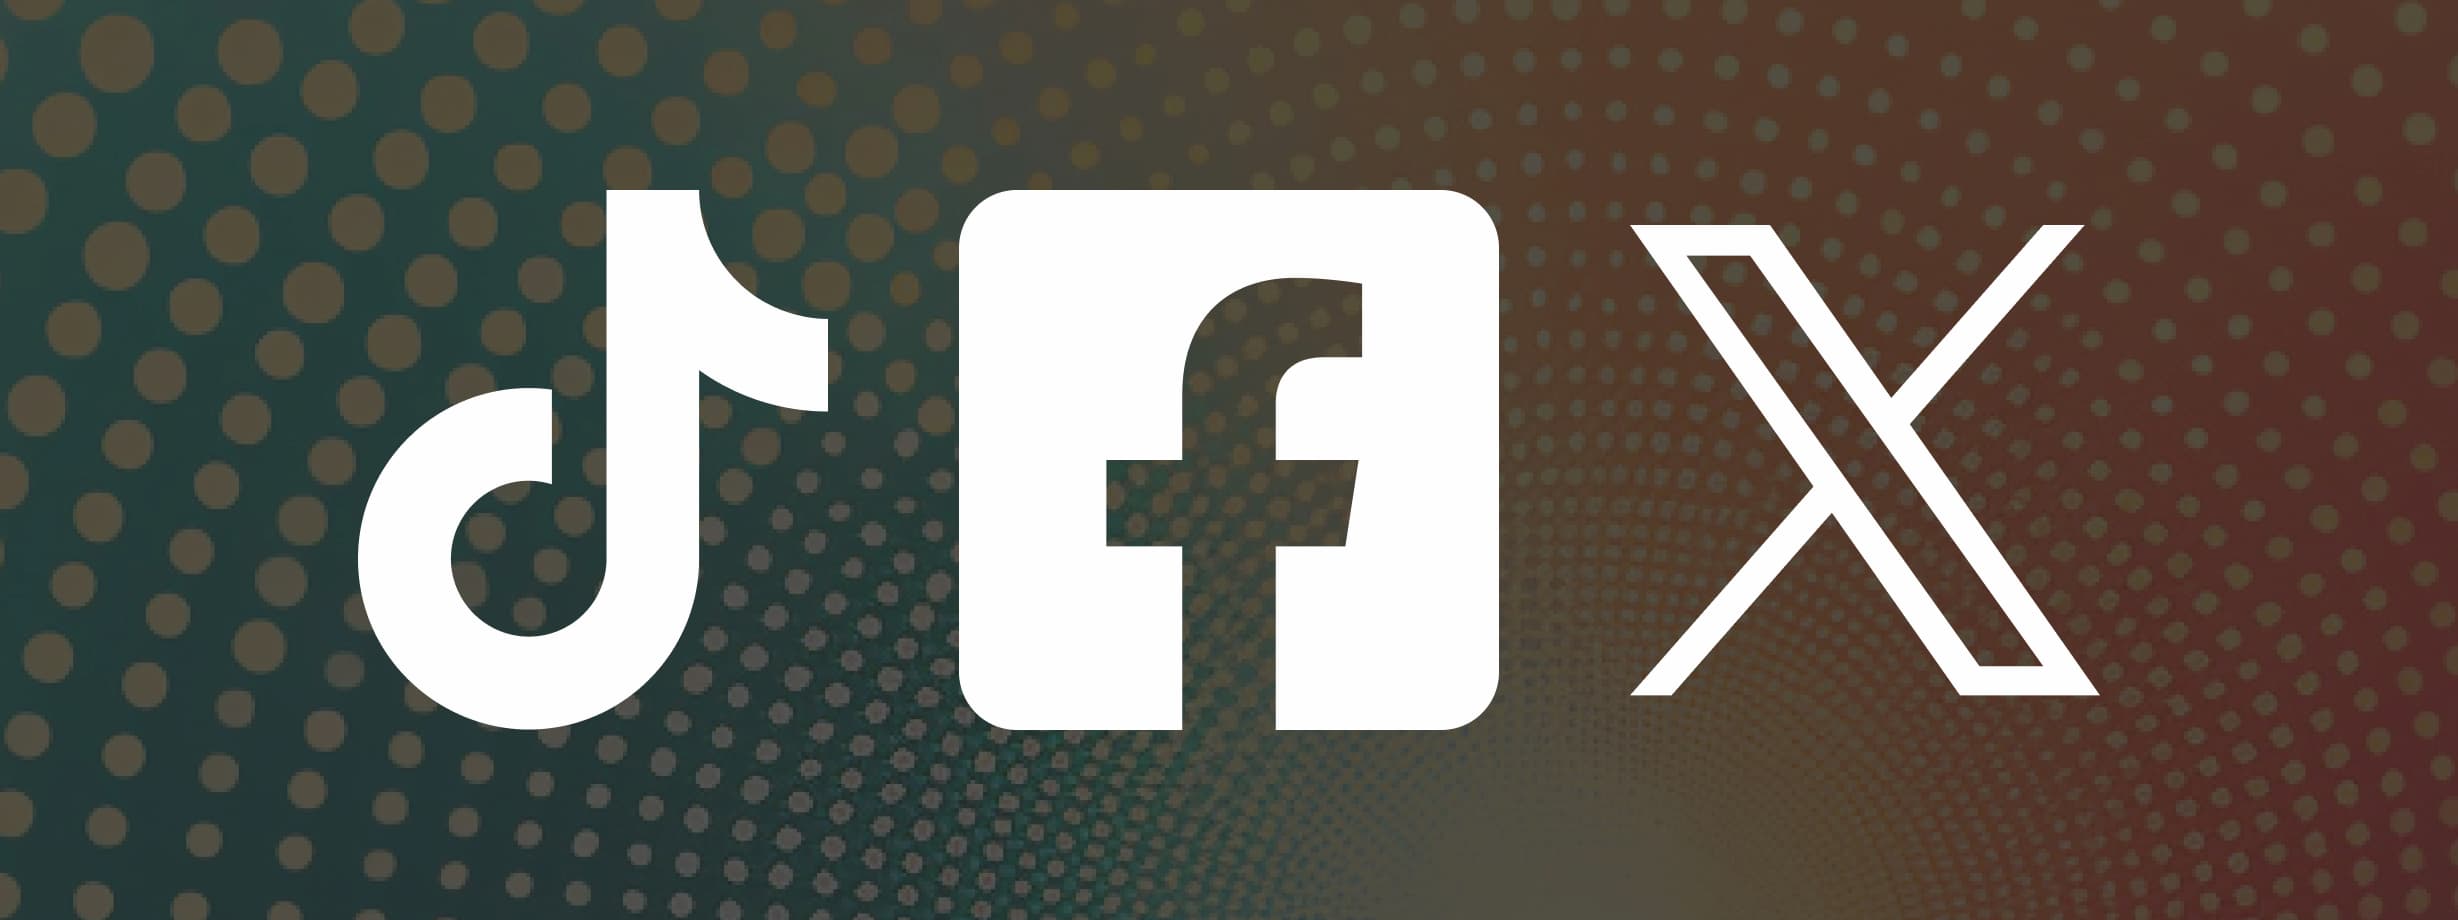 Tiktok Facebook X logos